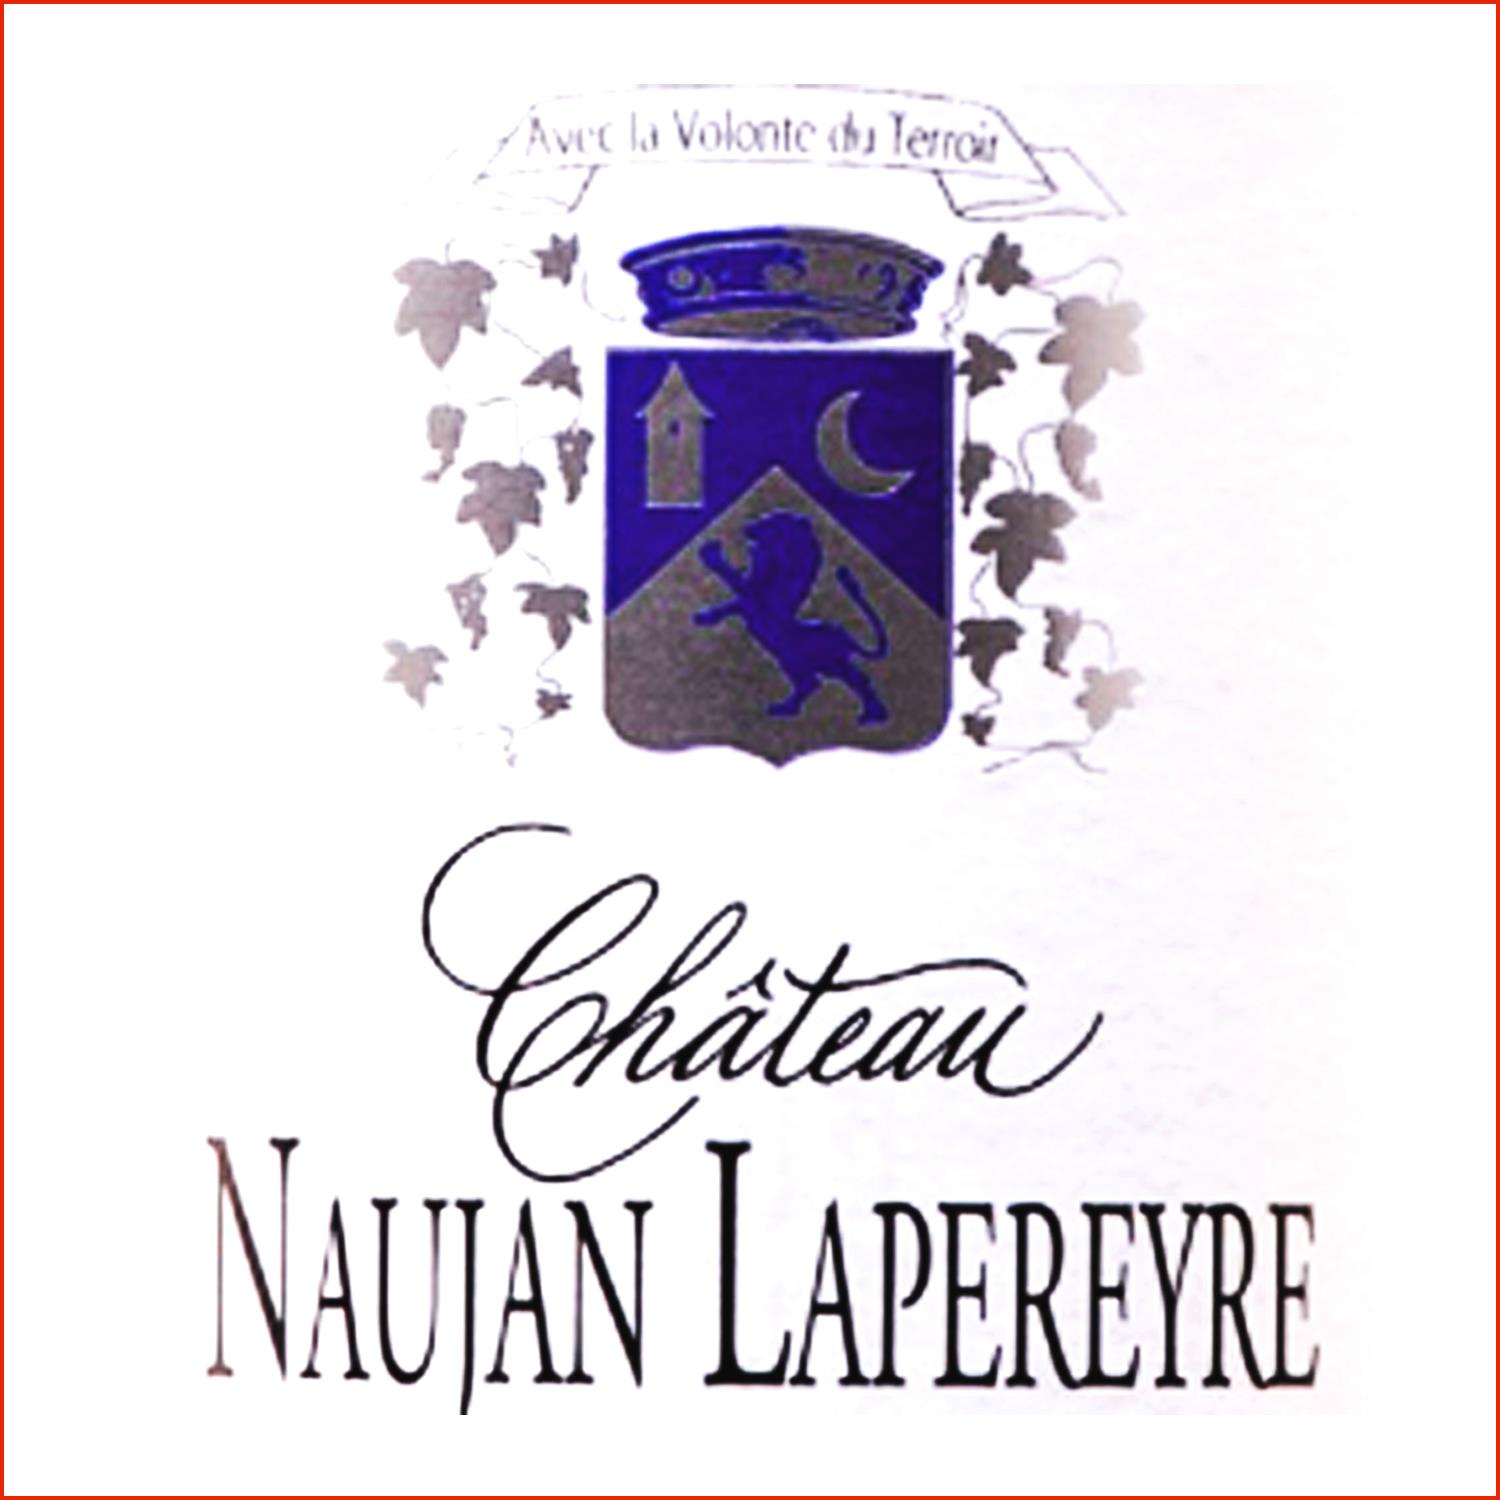 蓝狮古堡庄园 Chateau Naujan Lapereyre